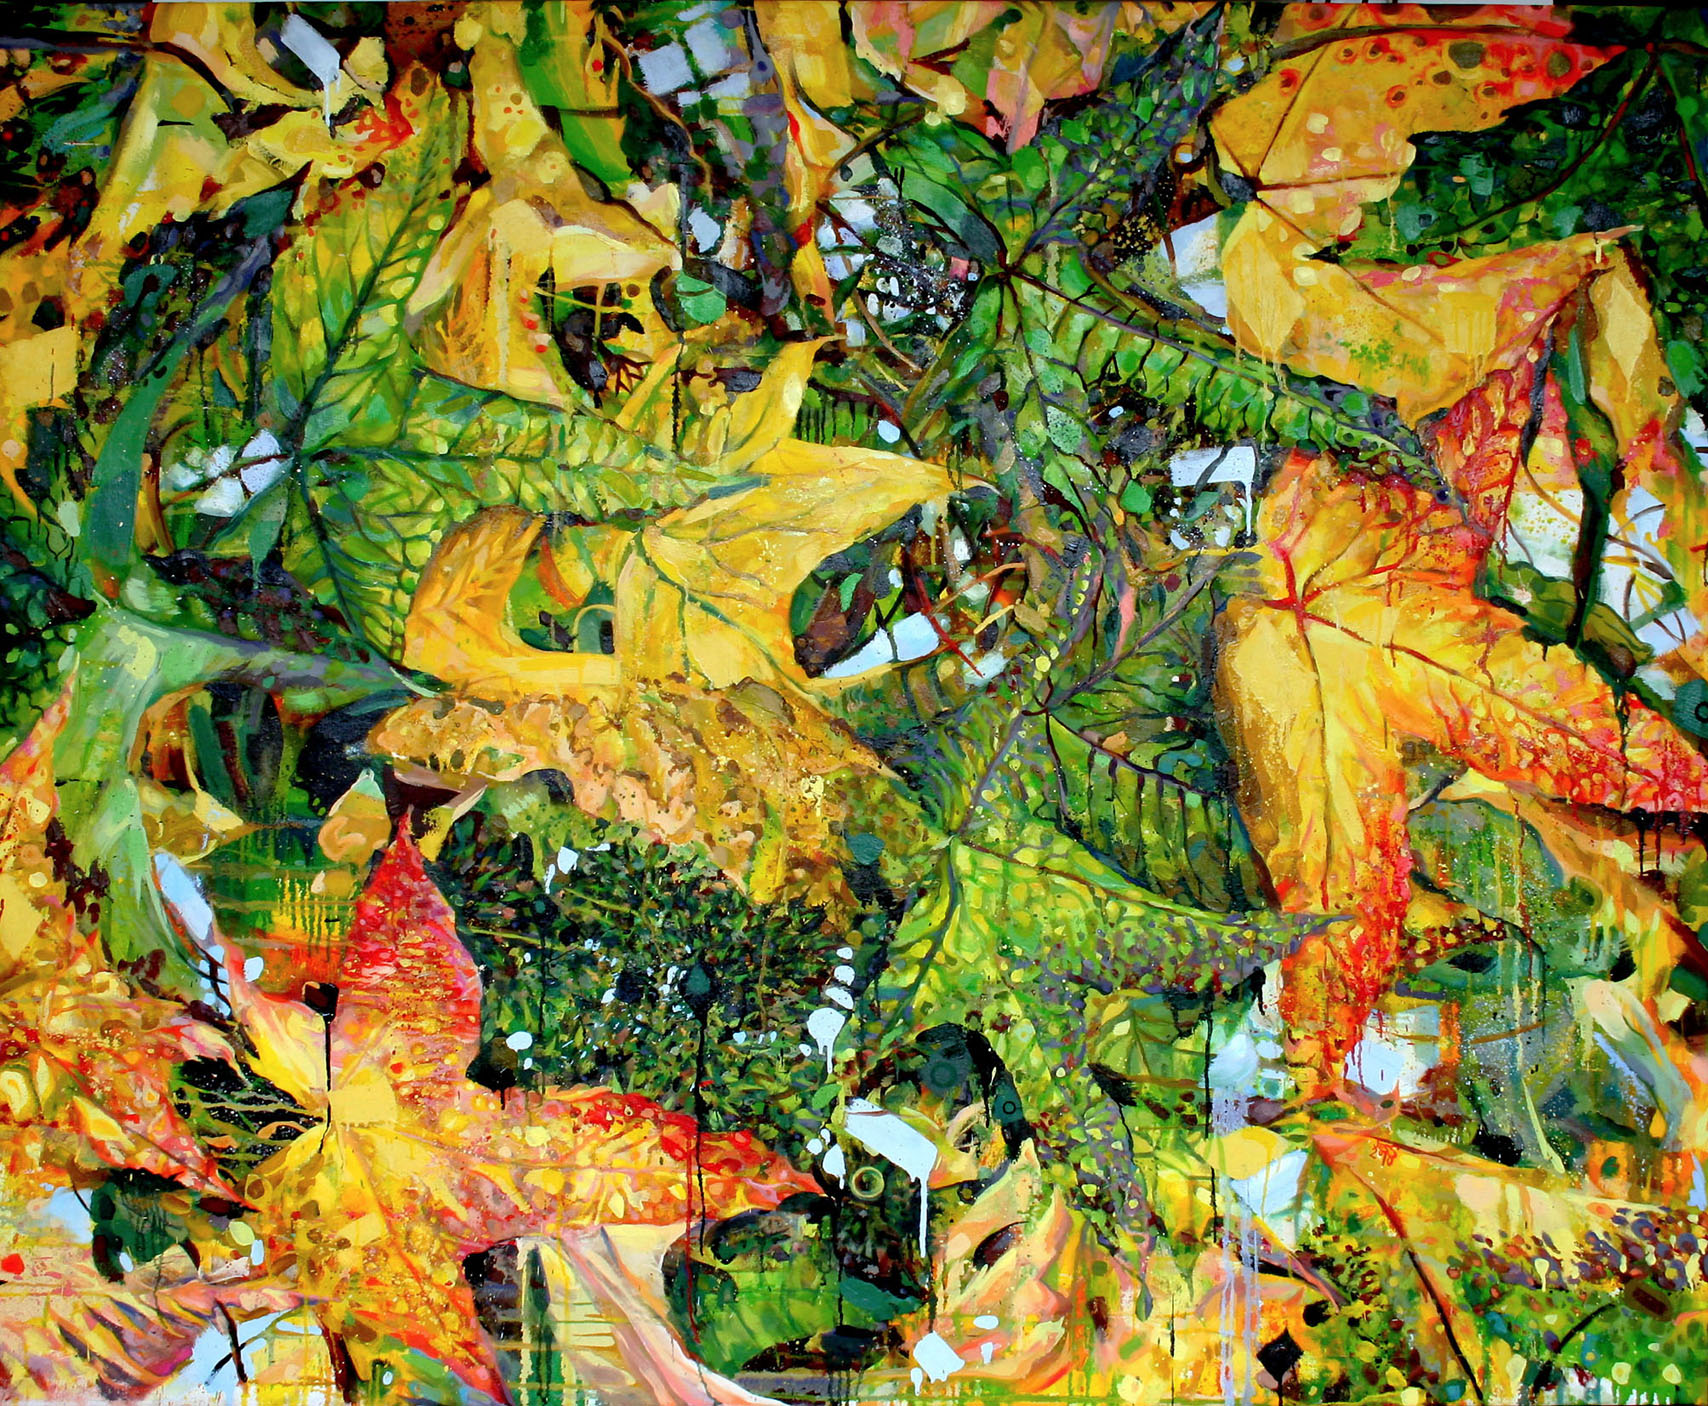 Falling Skies, oil on canvas, 78x64 in, Jessica Siemens 2010